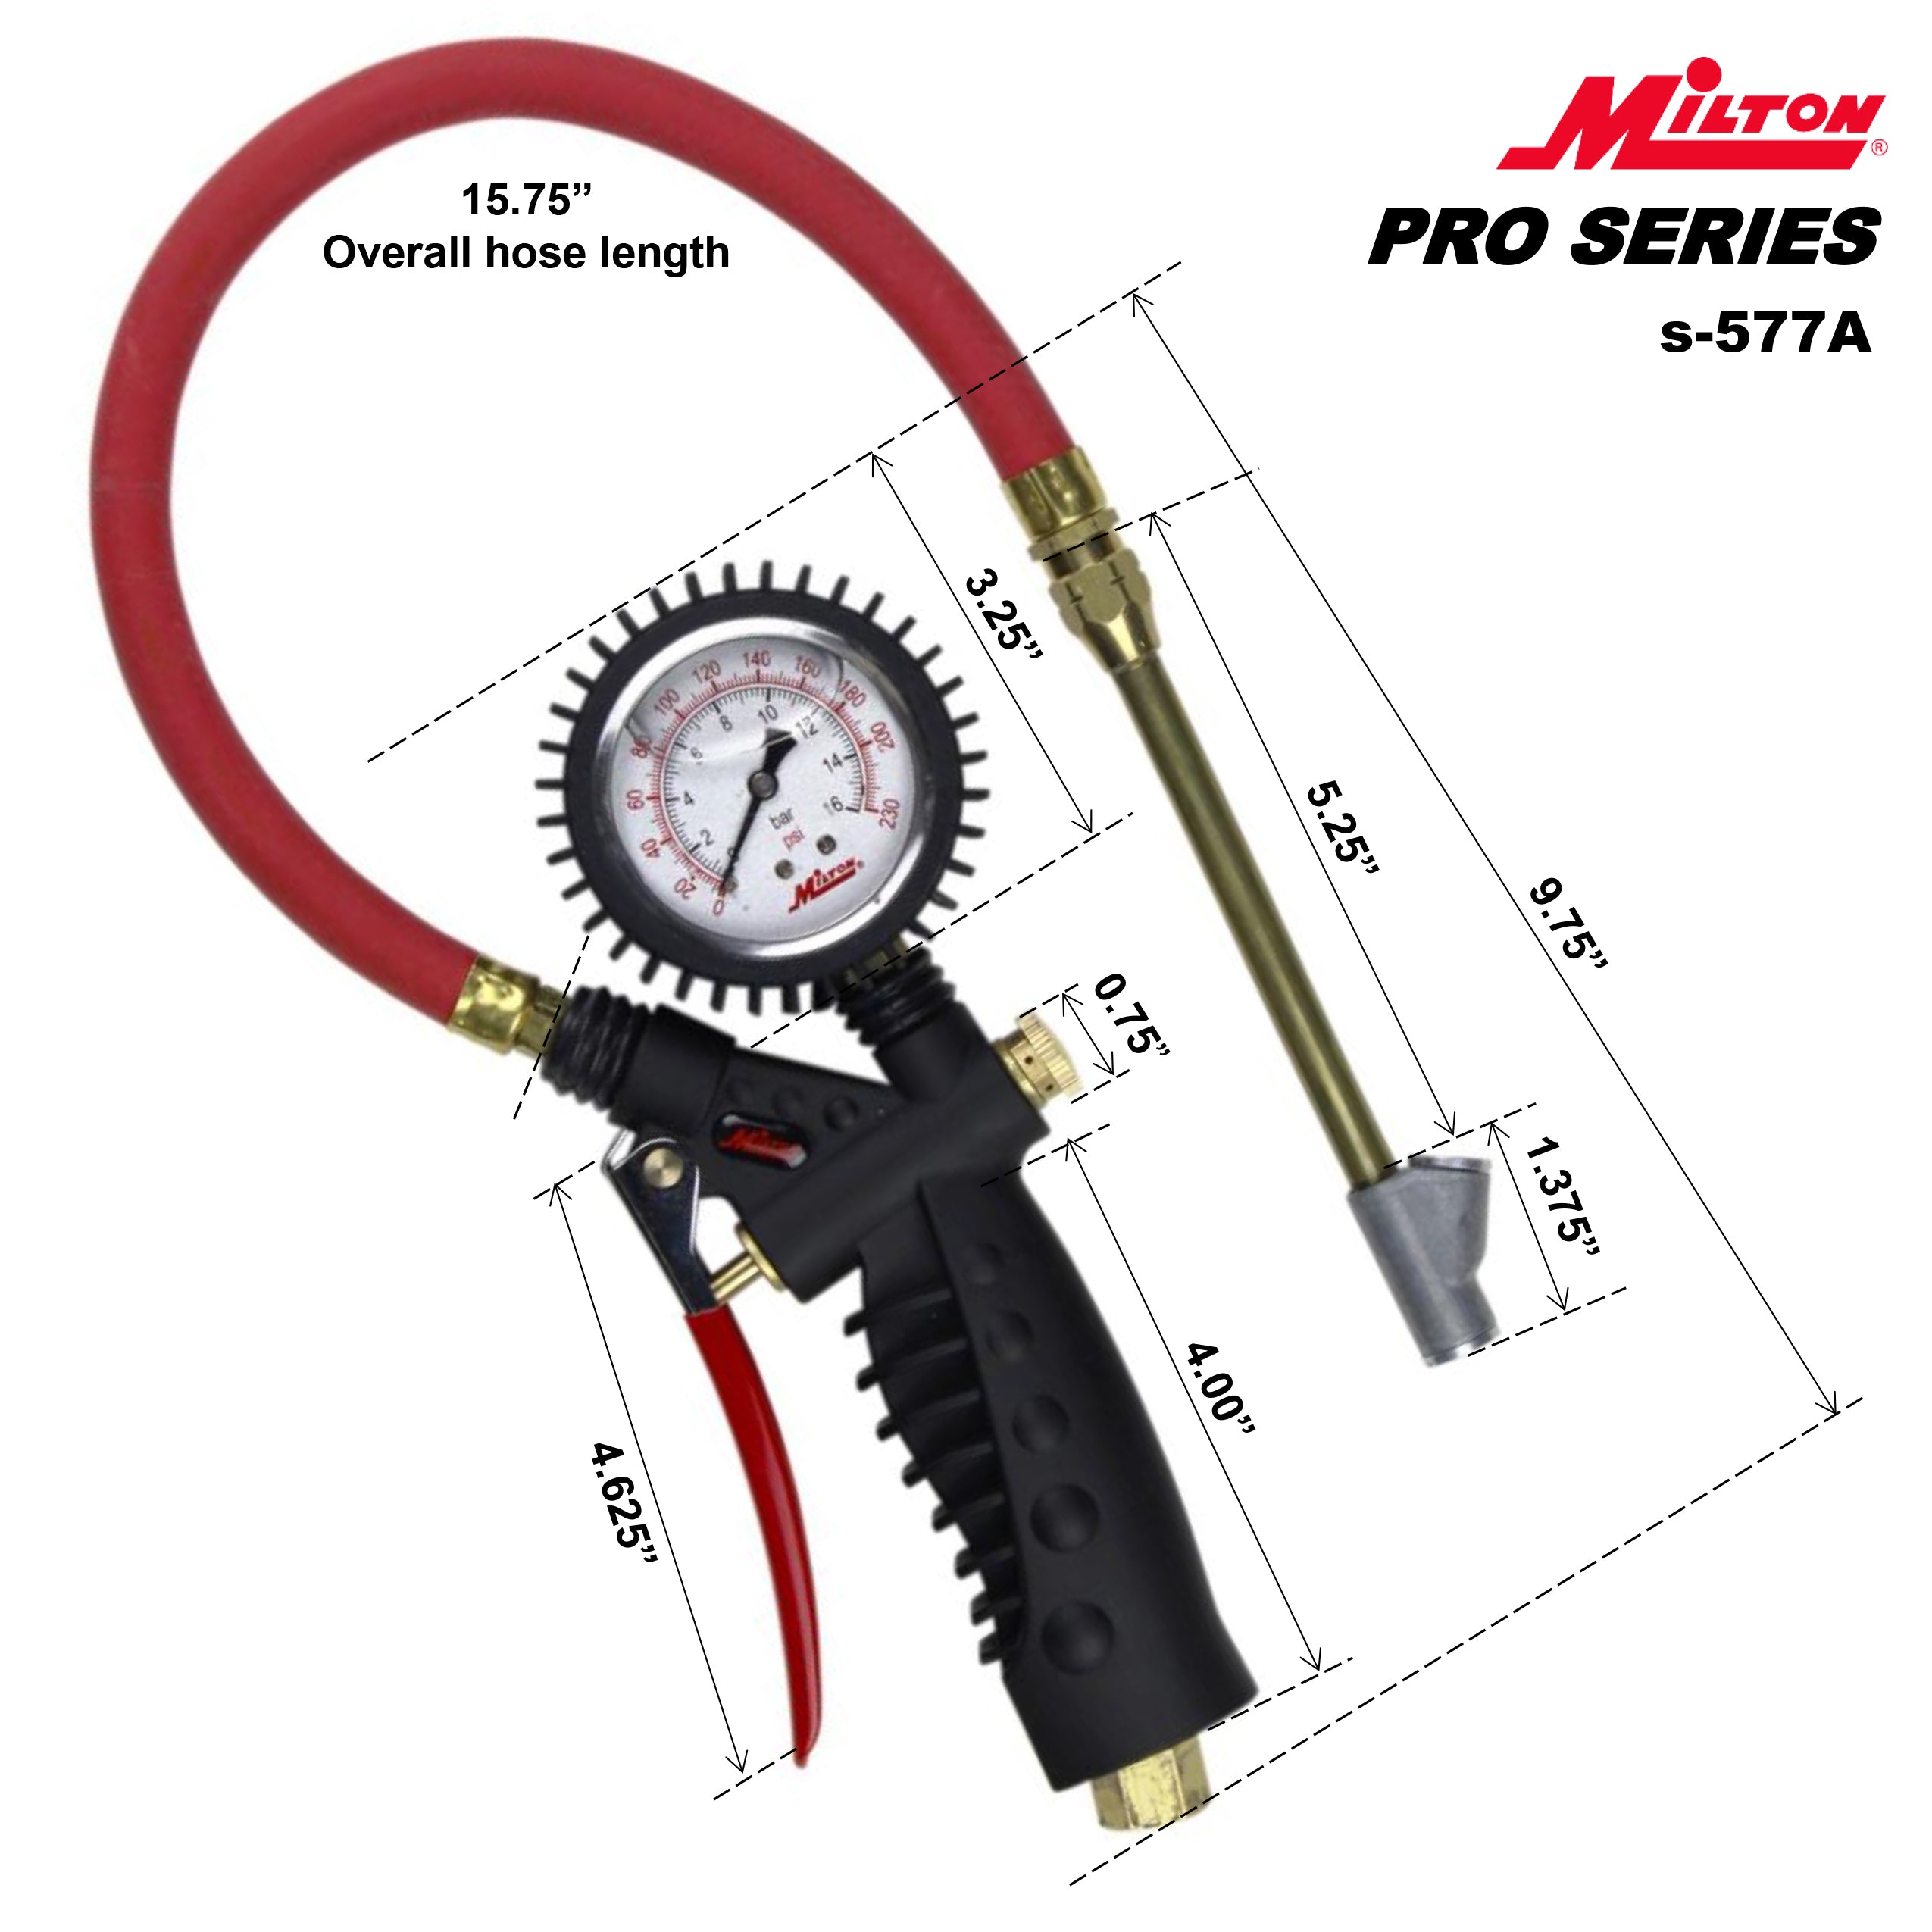 Pro Series Oil-Filled Analog Pistol Grip Tire Inflator/Deflator Pressure Gauge - Dual Head Straight Foot Chuck w/Lock-On Threads, 15